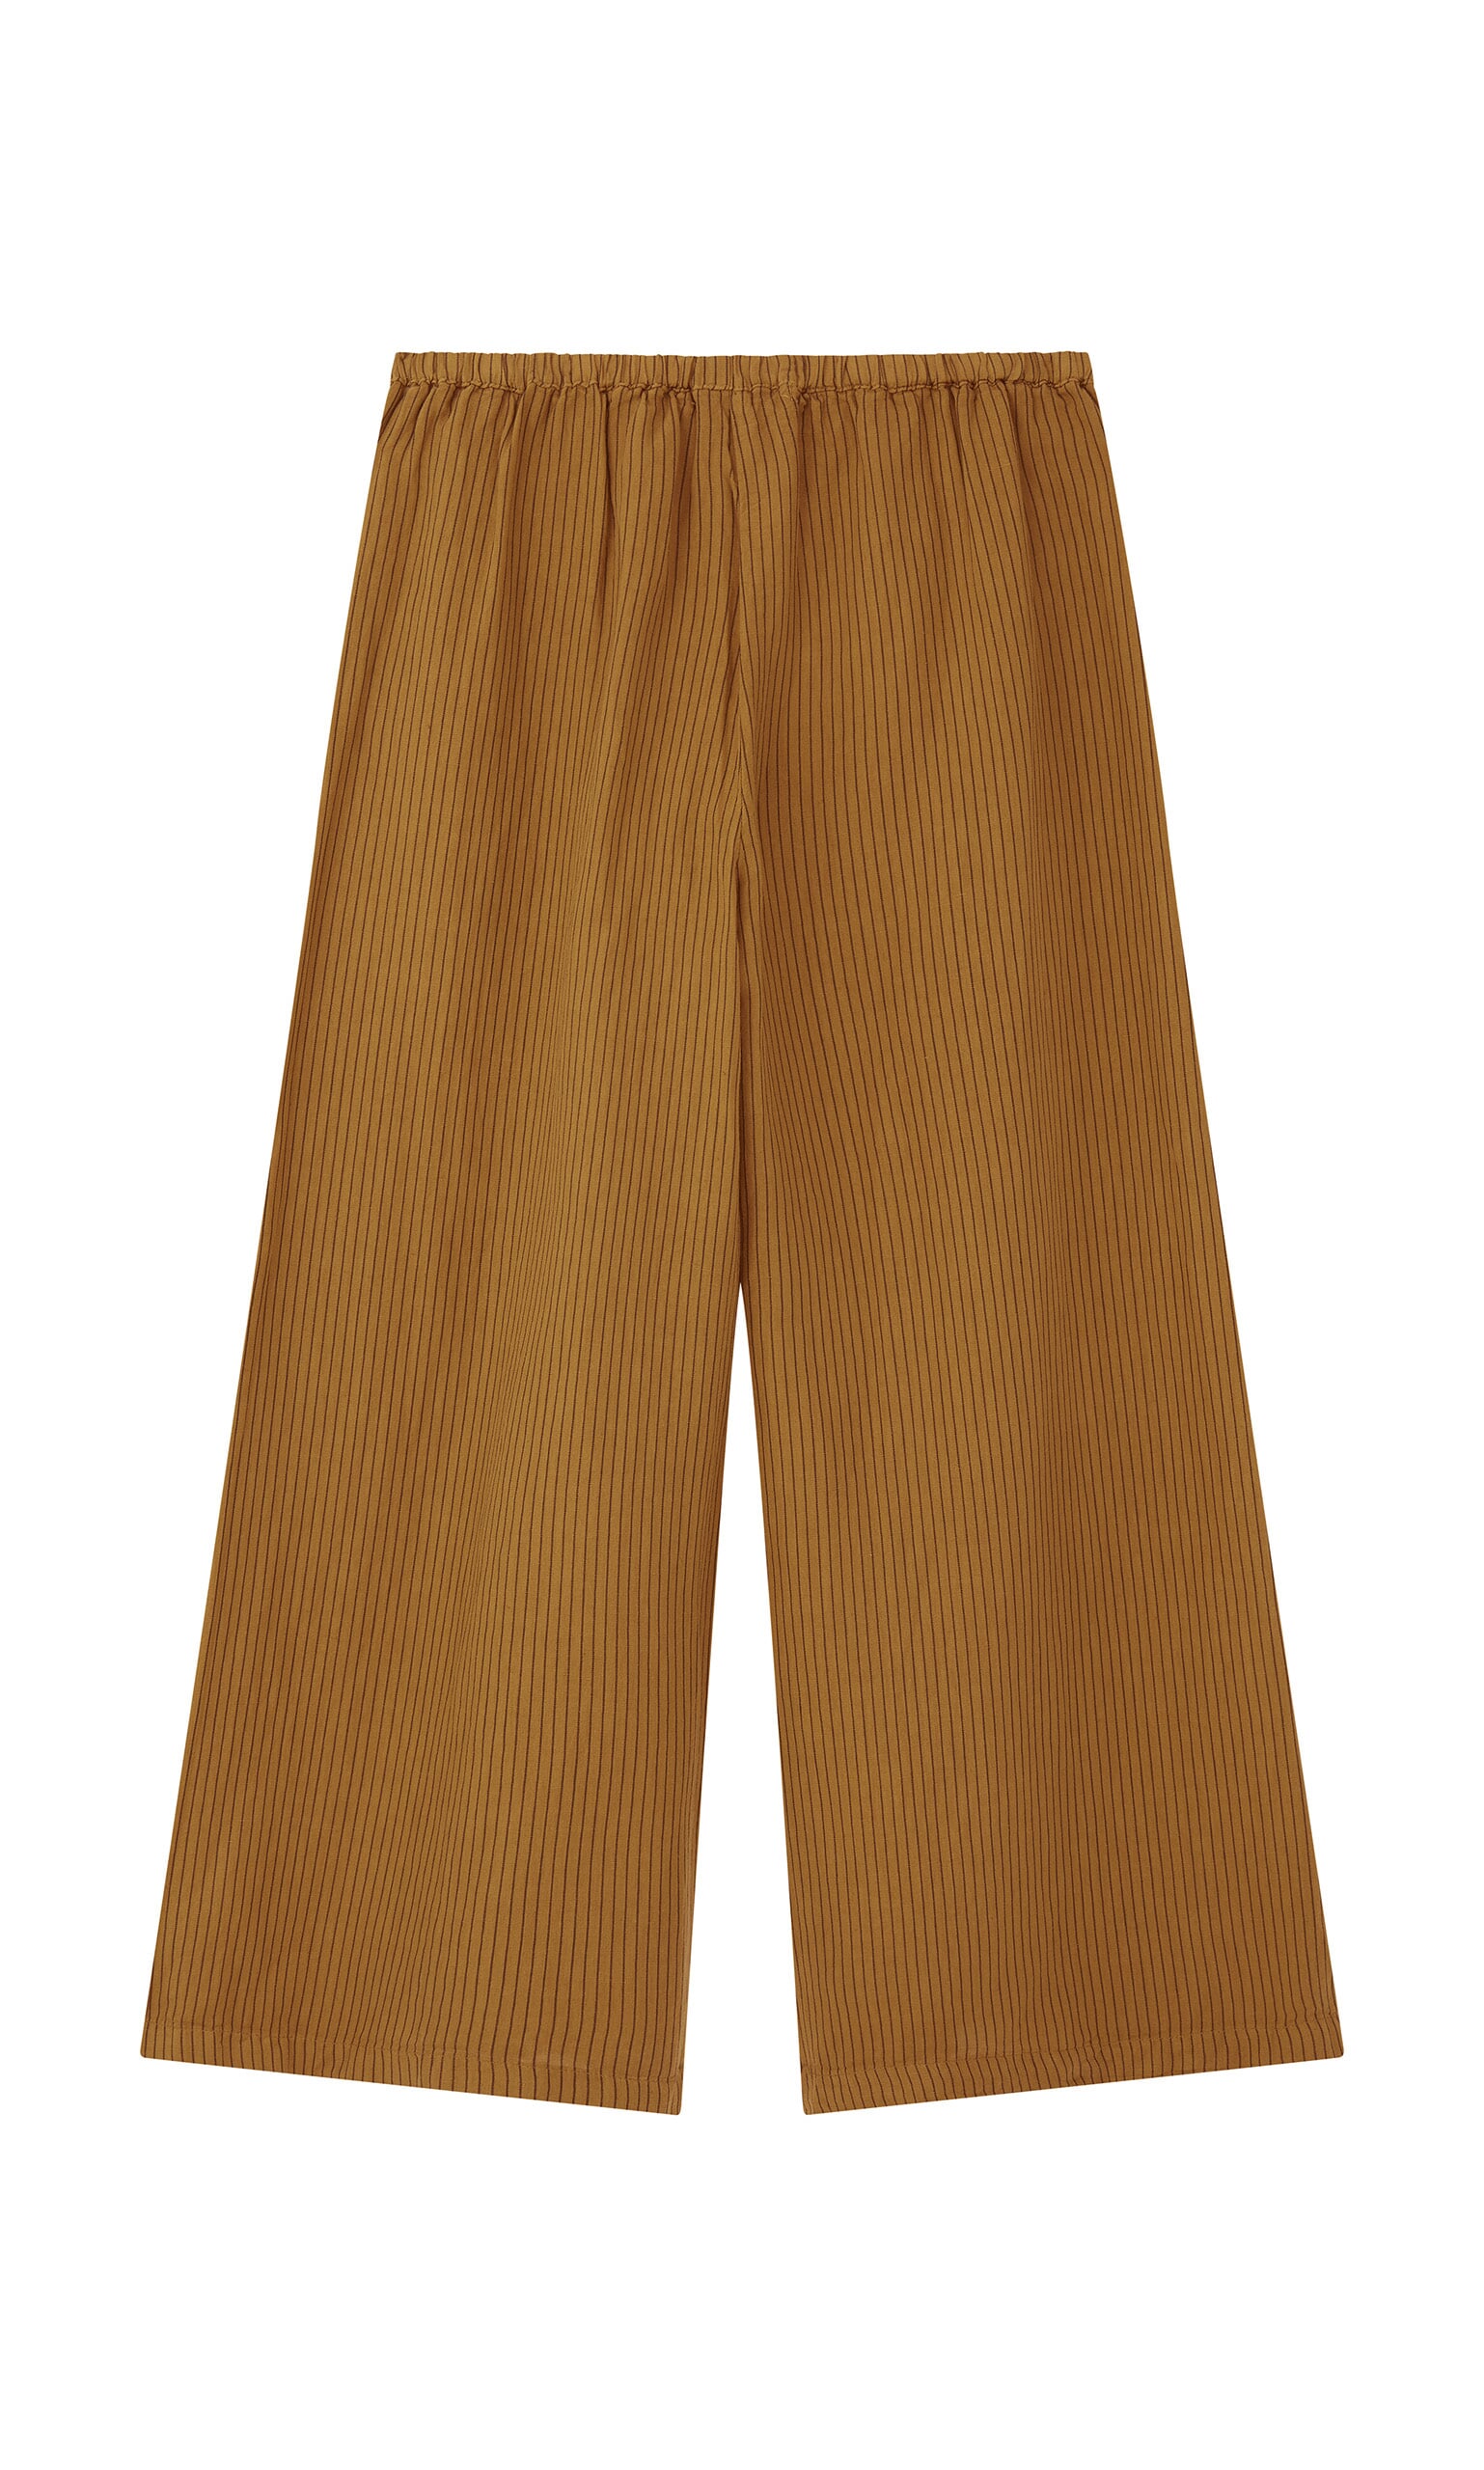 Marsh pants - Plümo Ltd